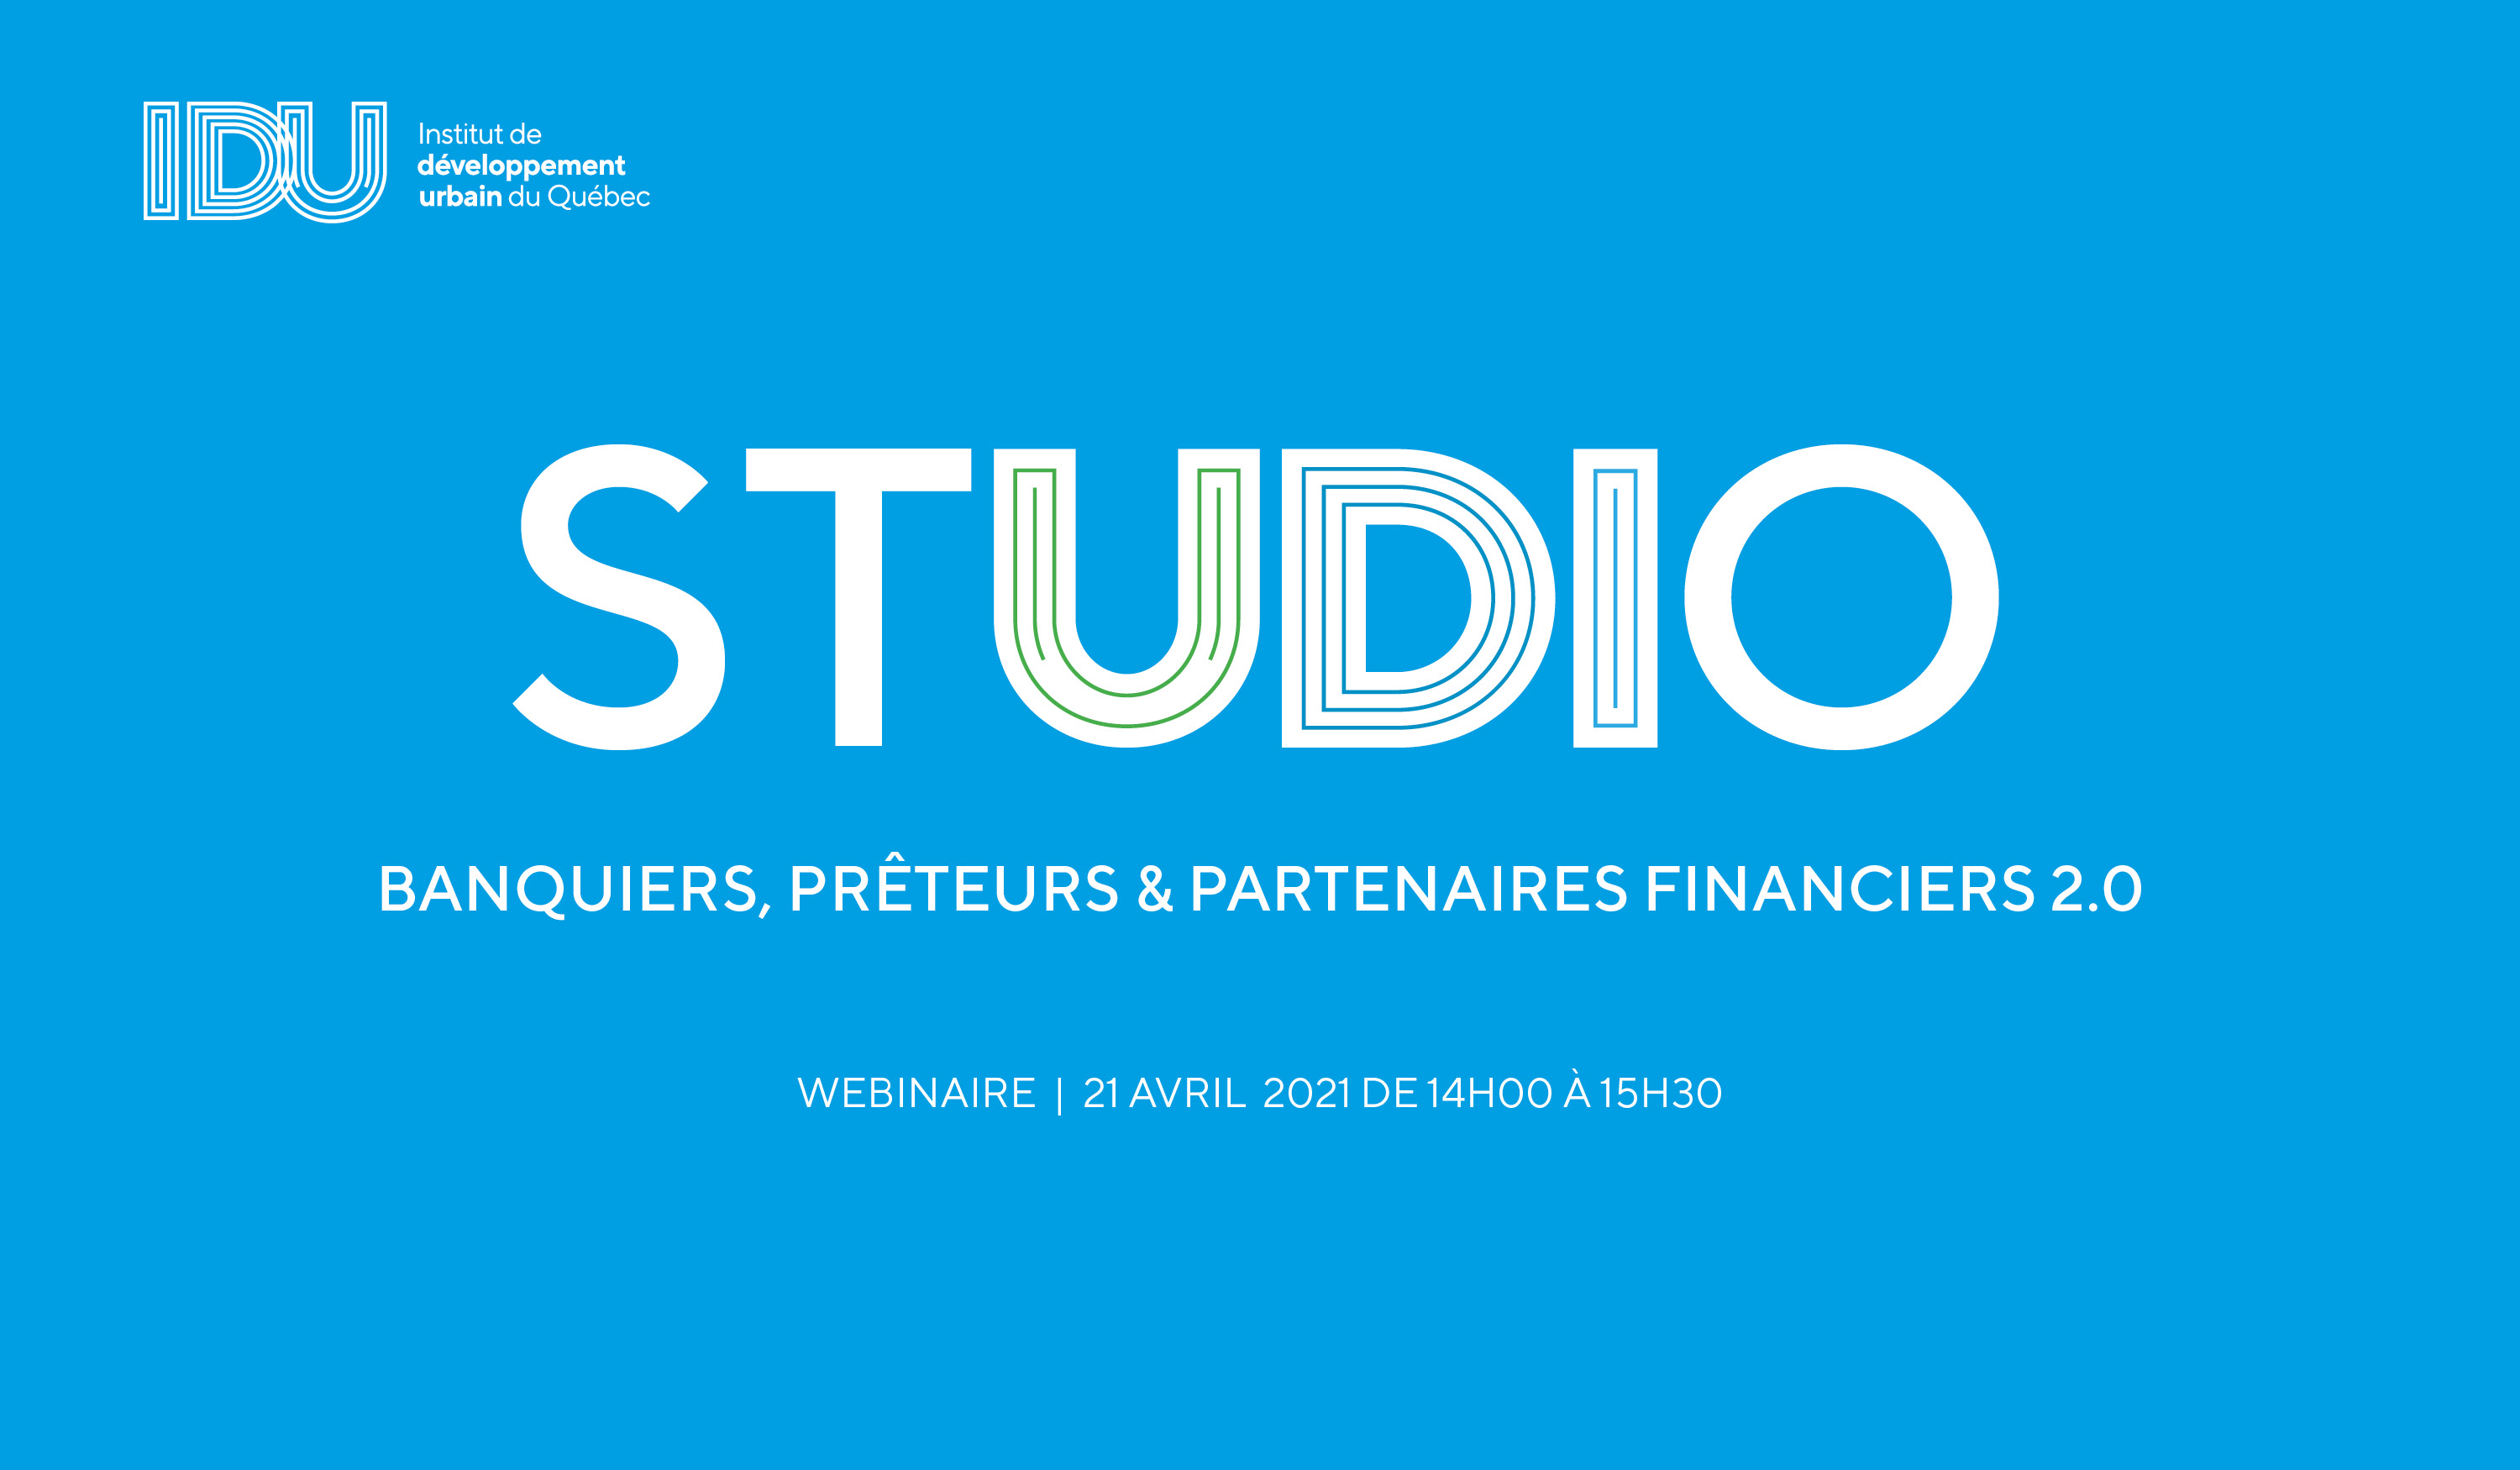 STUDIO IDU - Banquiers, Prêteurs & Partenaires financiers 2.0